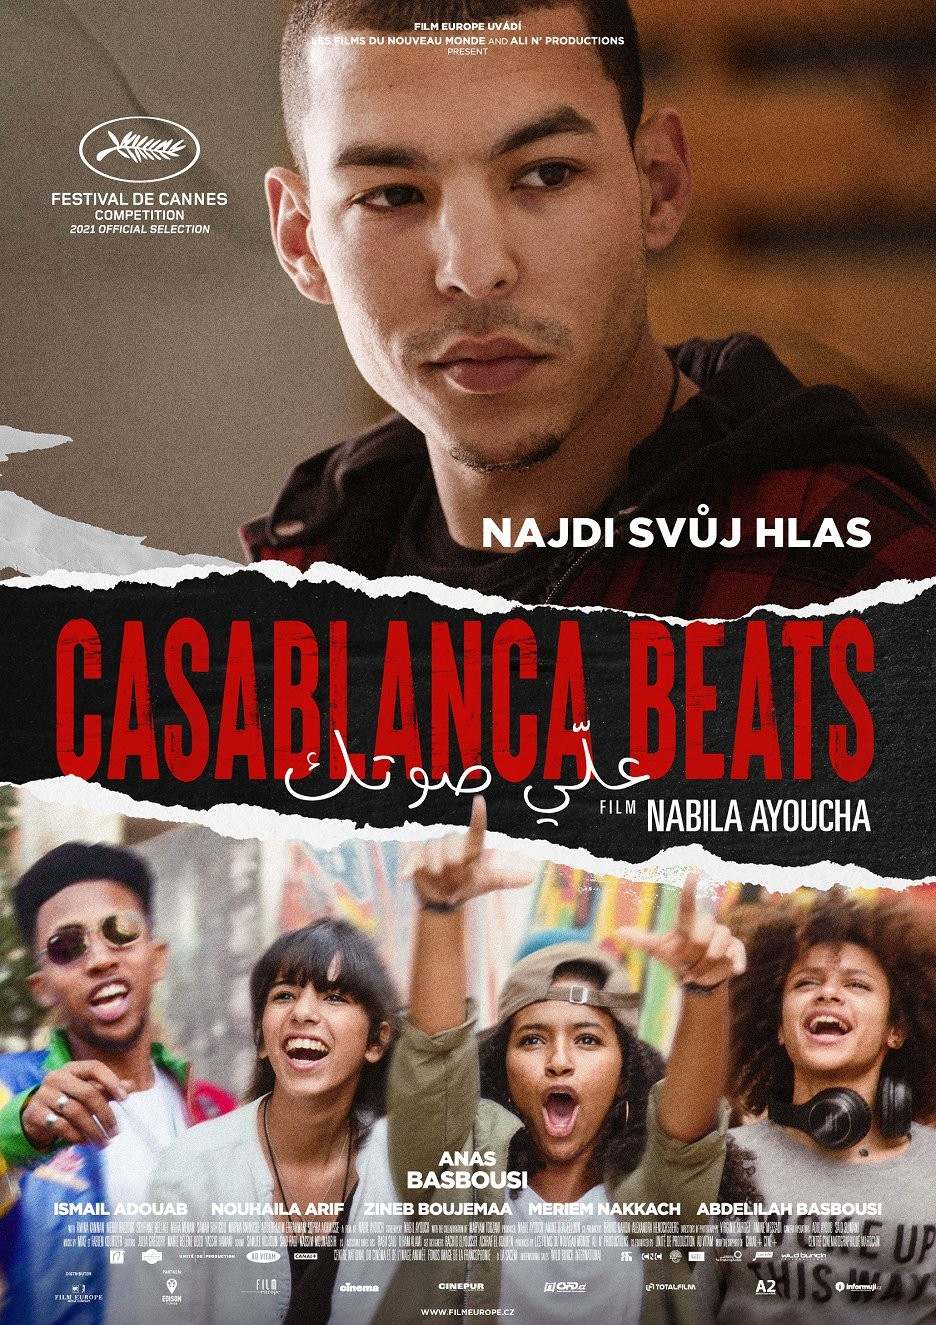 Film Casablanca Beats